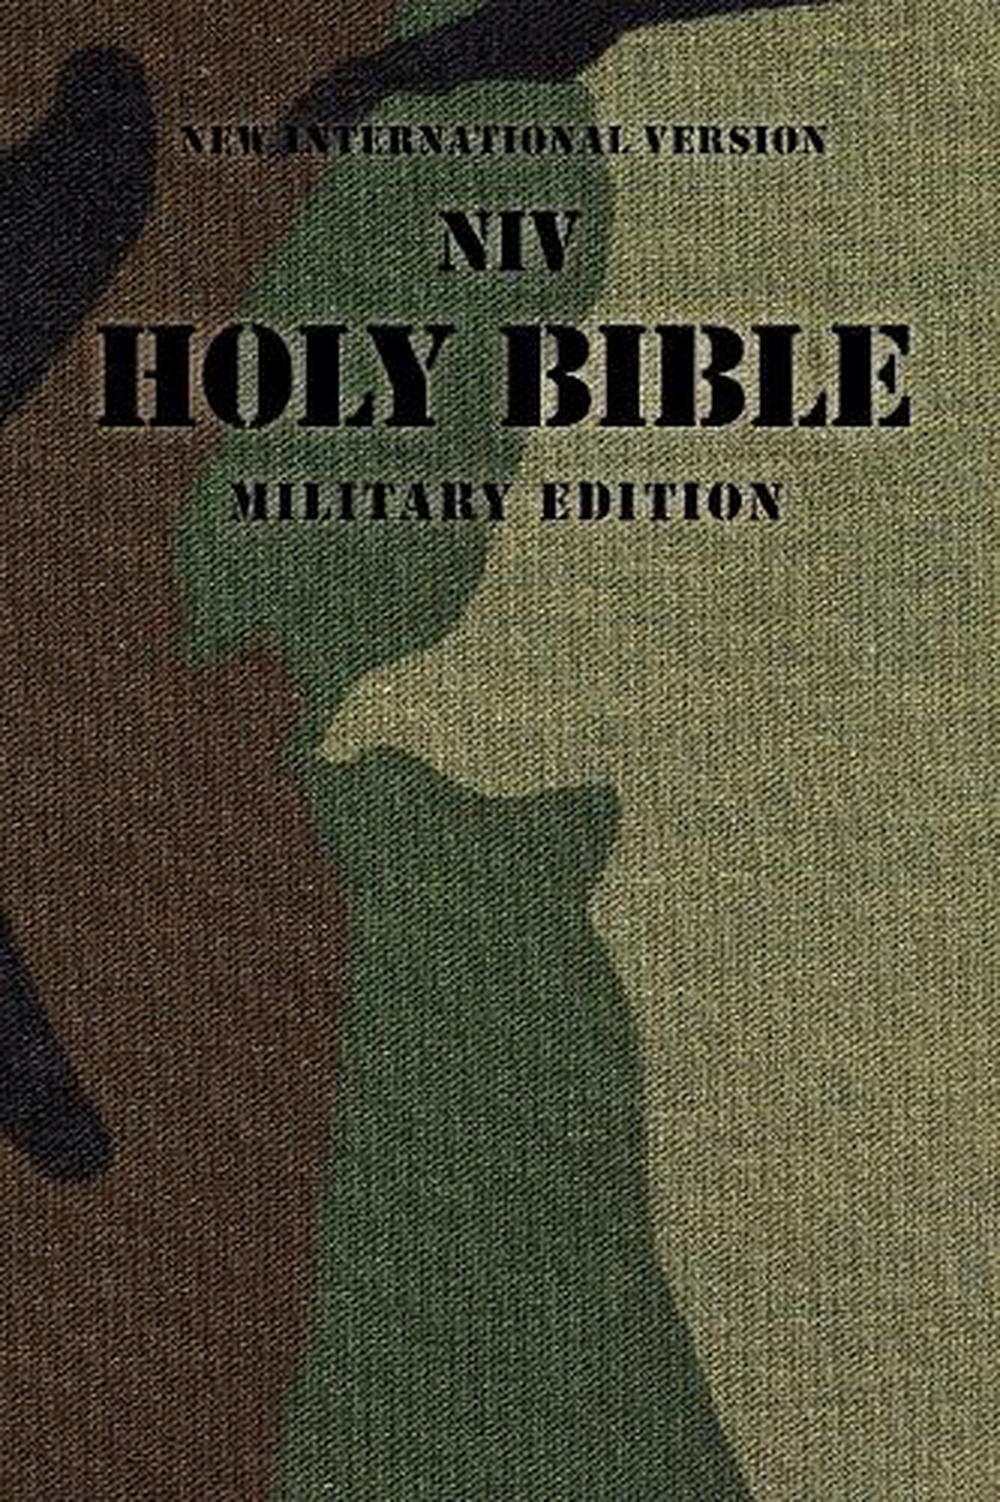 niv bible for easyworship 2009 free download